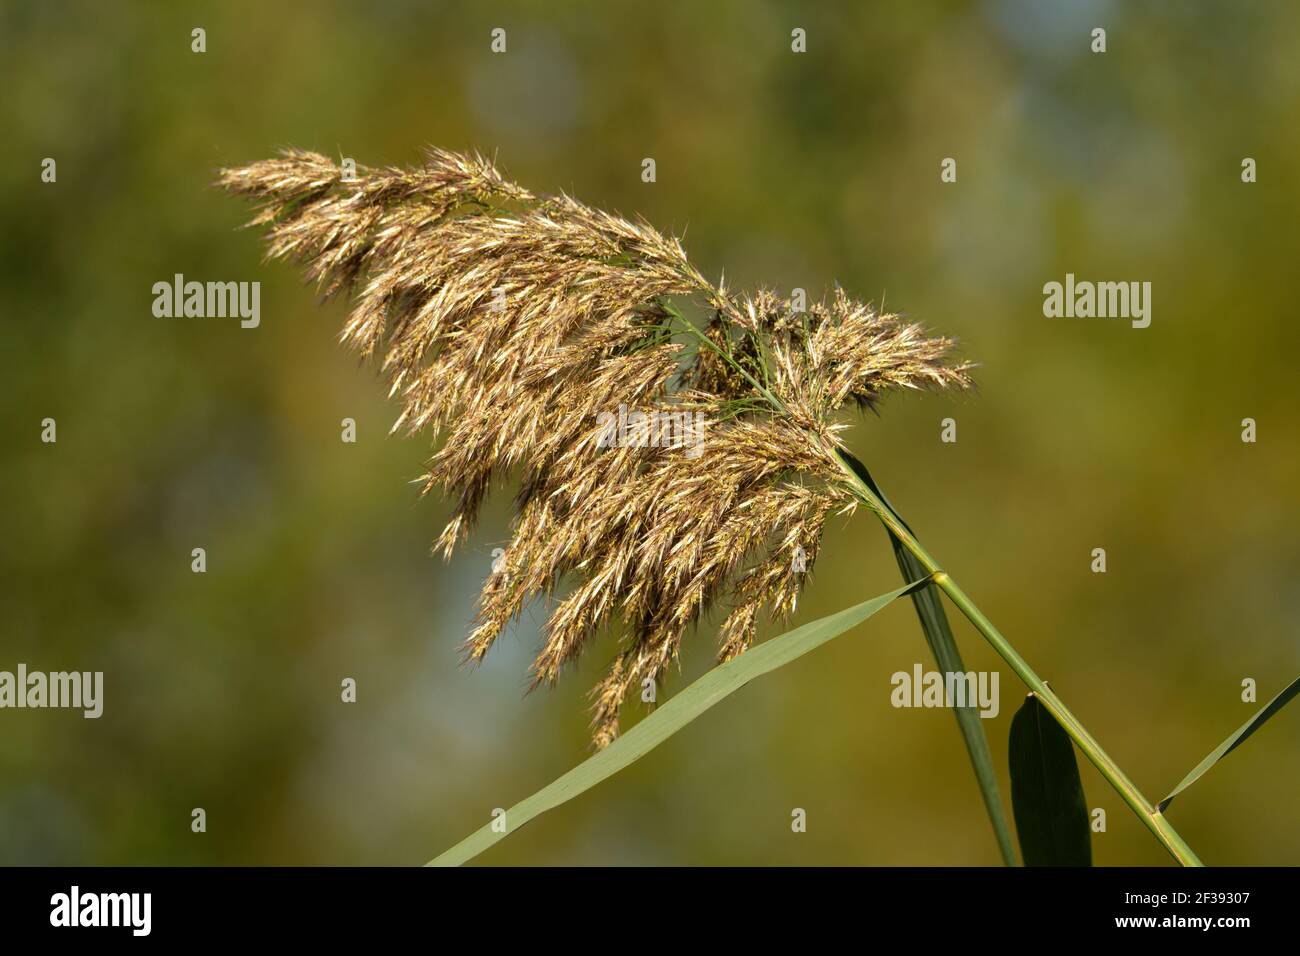 single marsh sedge plant flowering against a natural green background Stock Photo